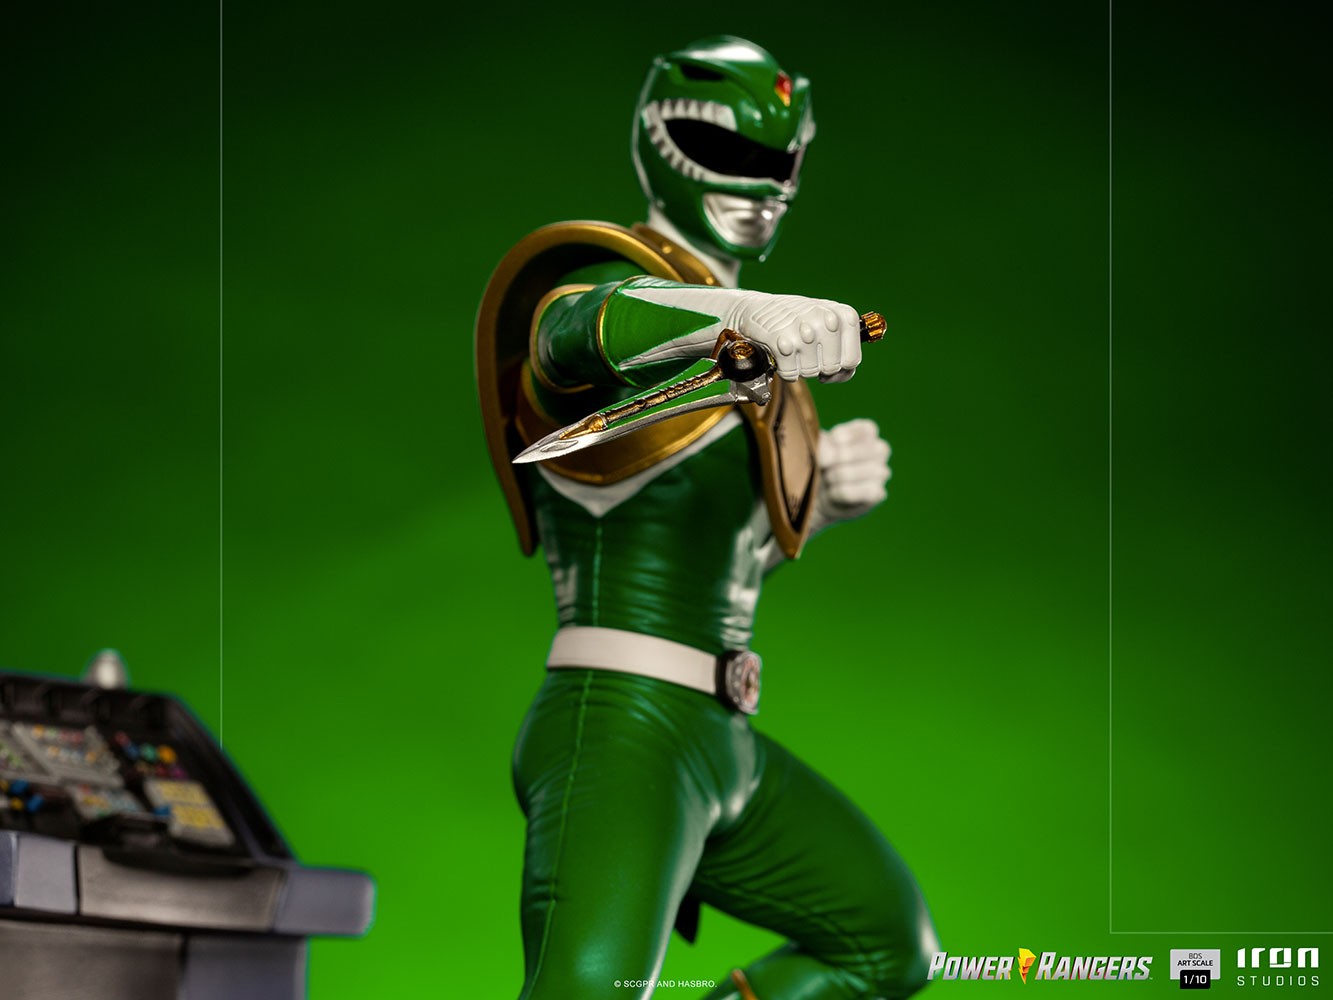 Green Ranger (Prototype Shown) View 9